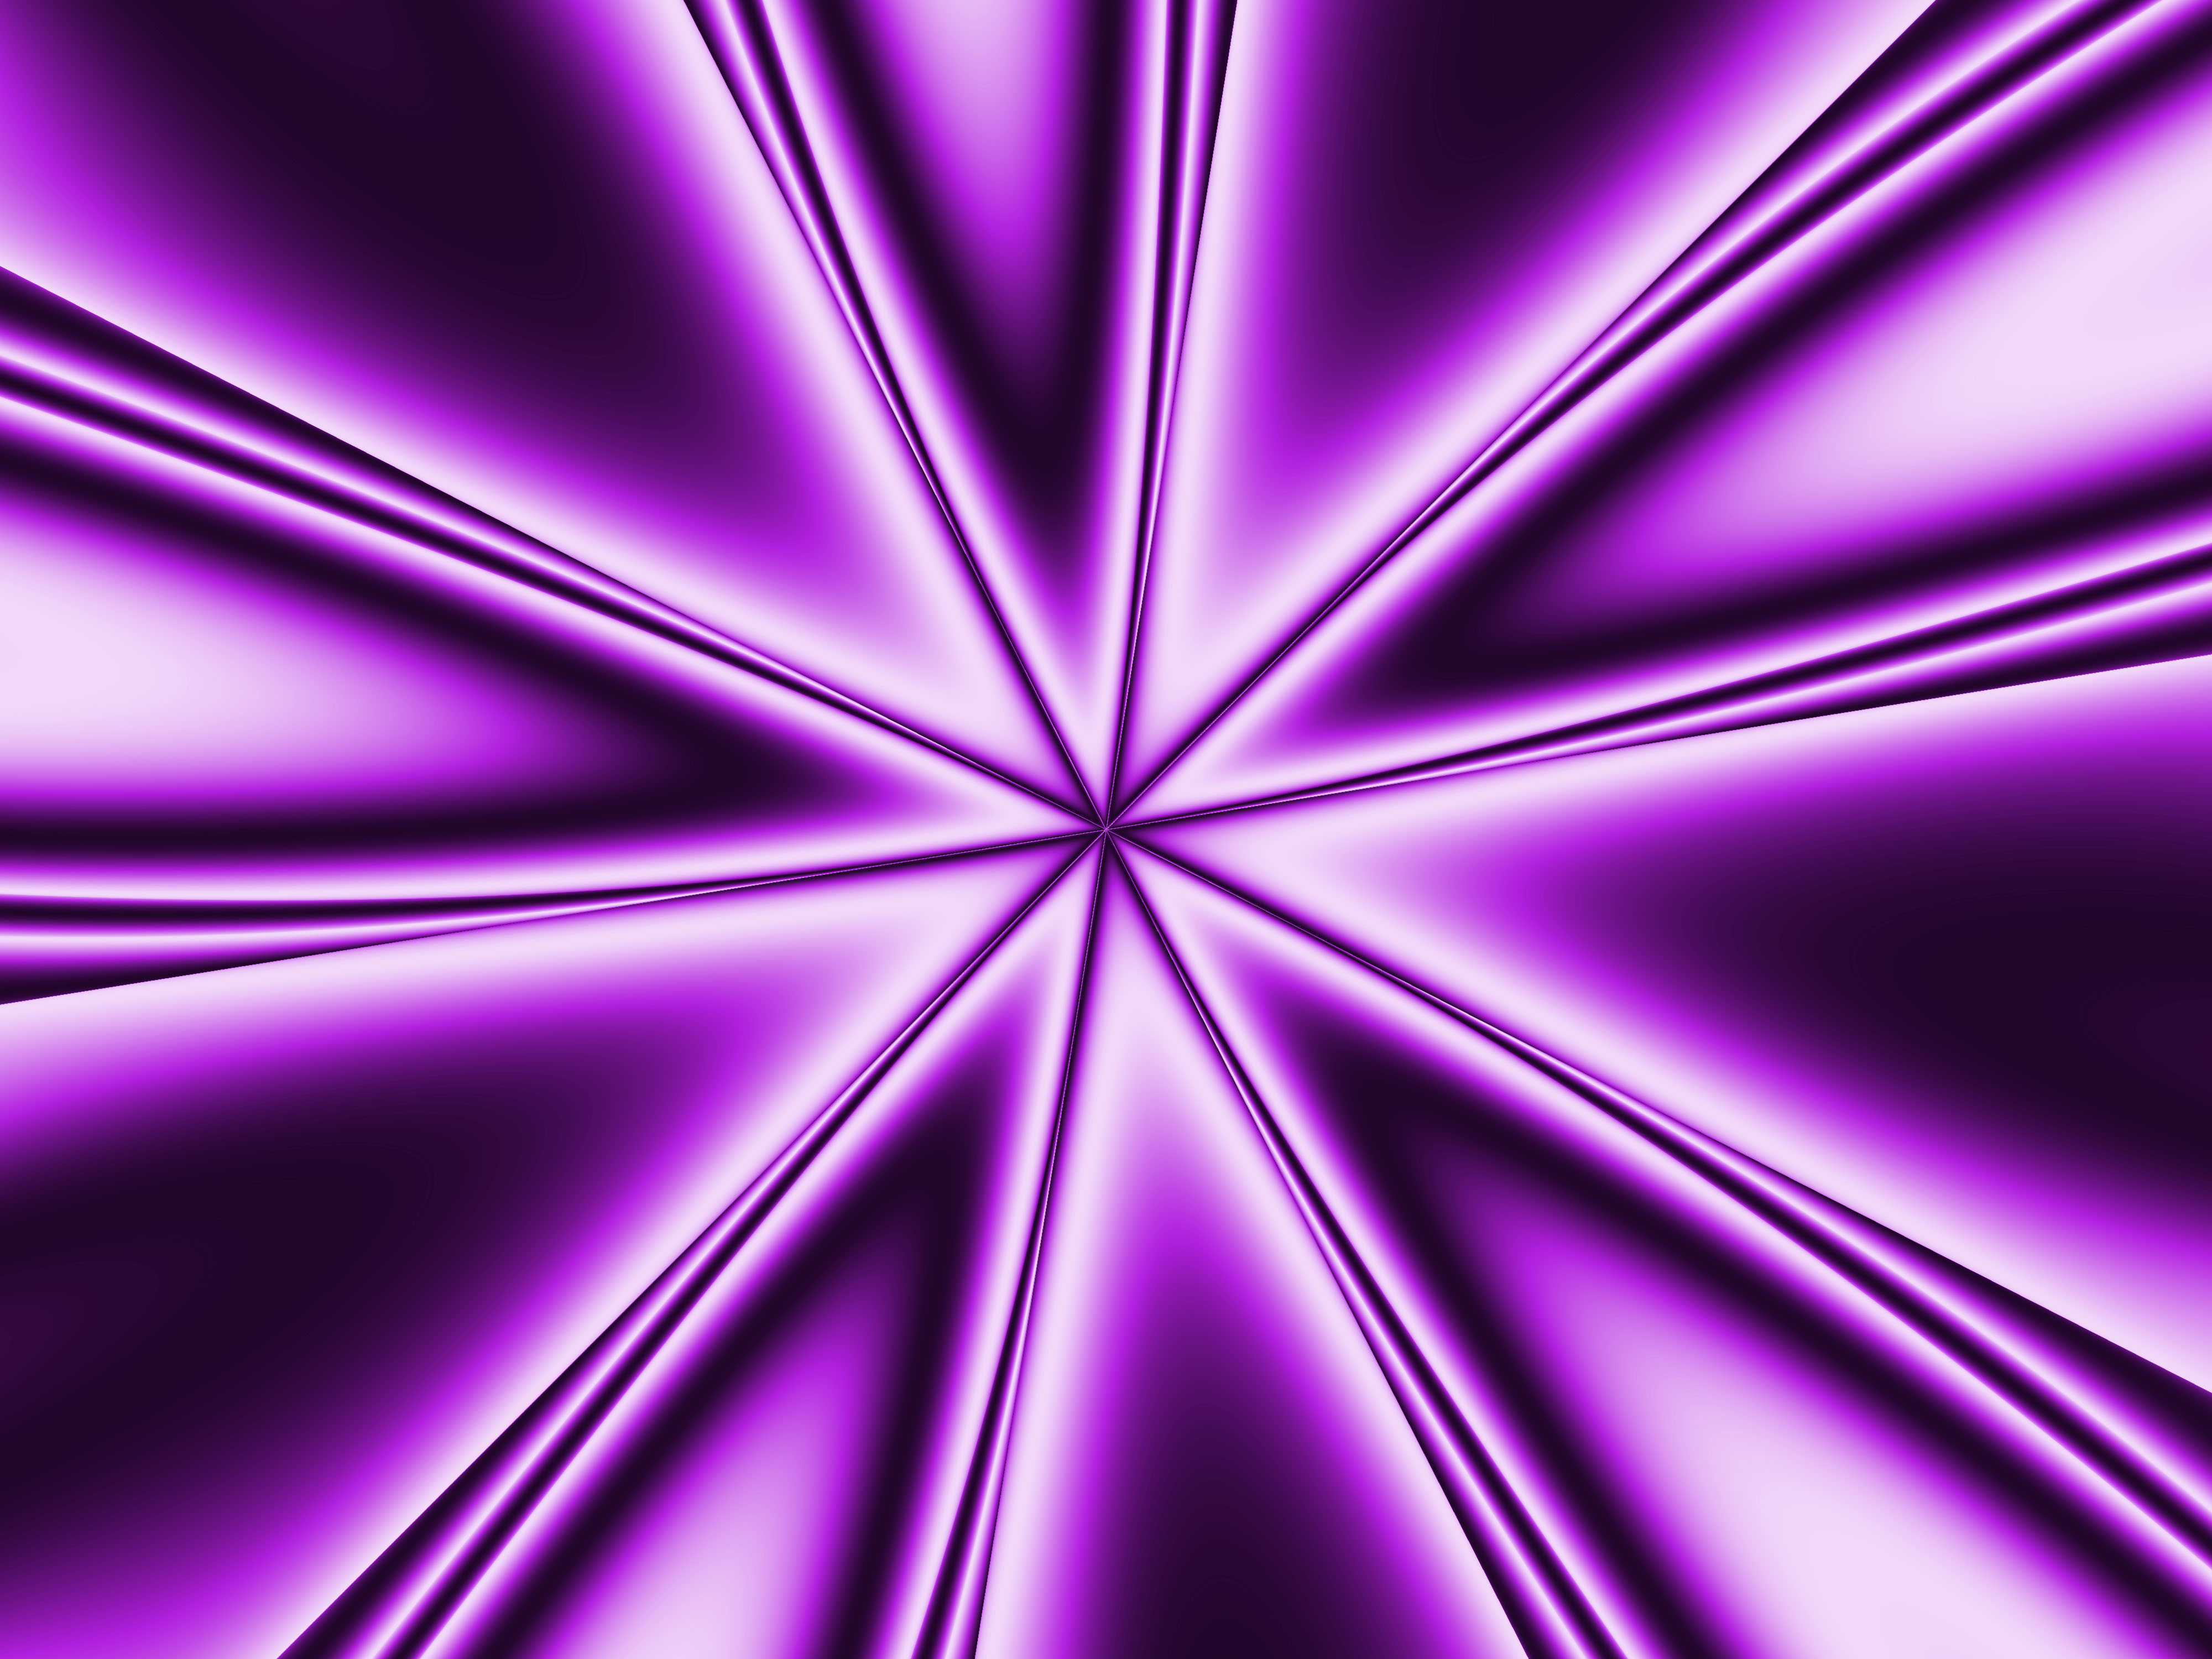 Abstract violet by Susanlu4esm